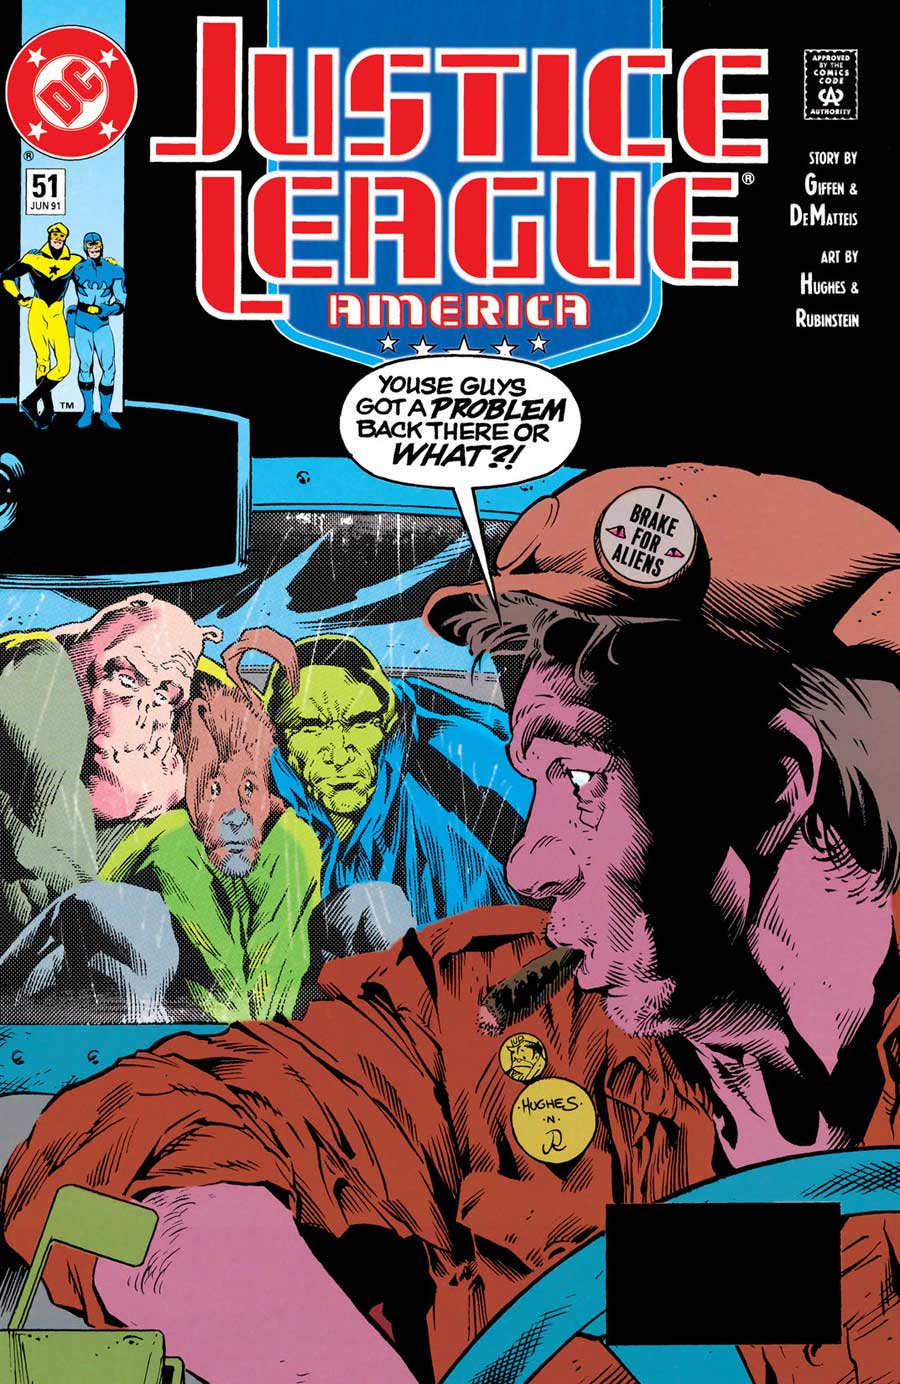 Justice League America #51 cover by Adam Hughes & Joe Rubinstein